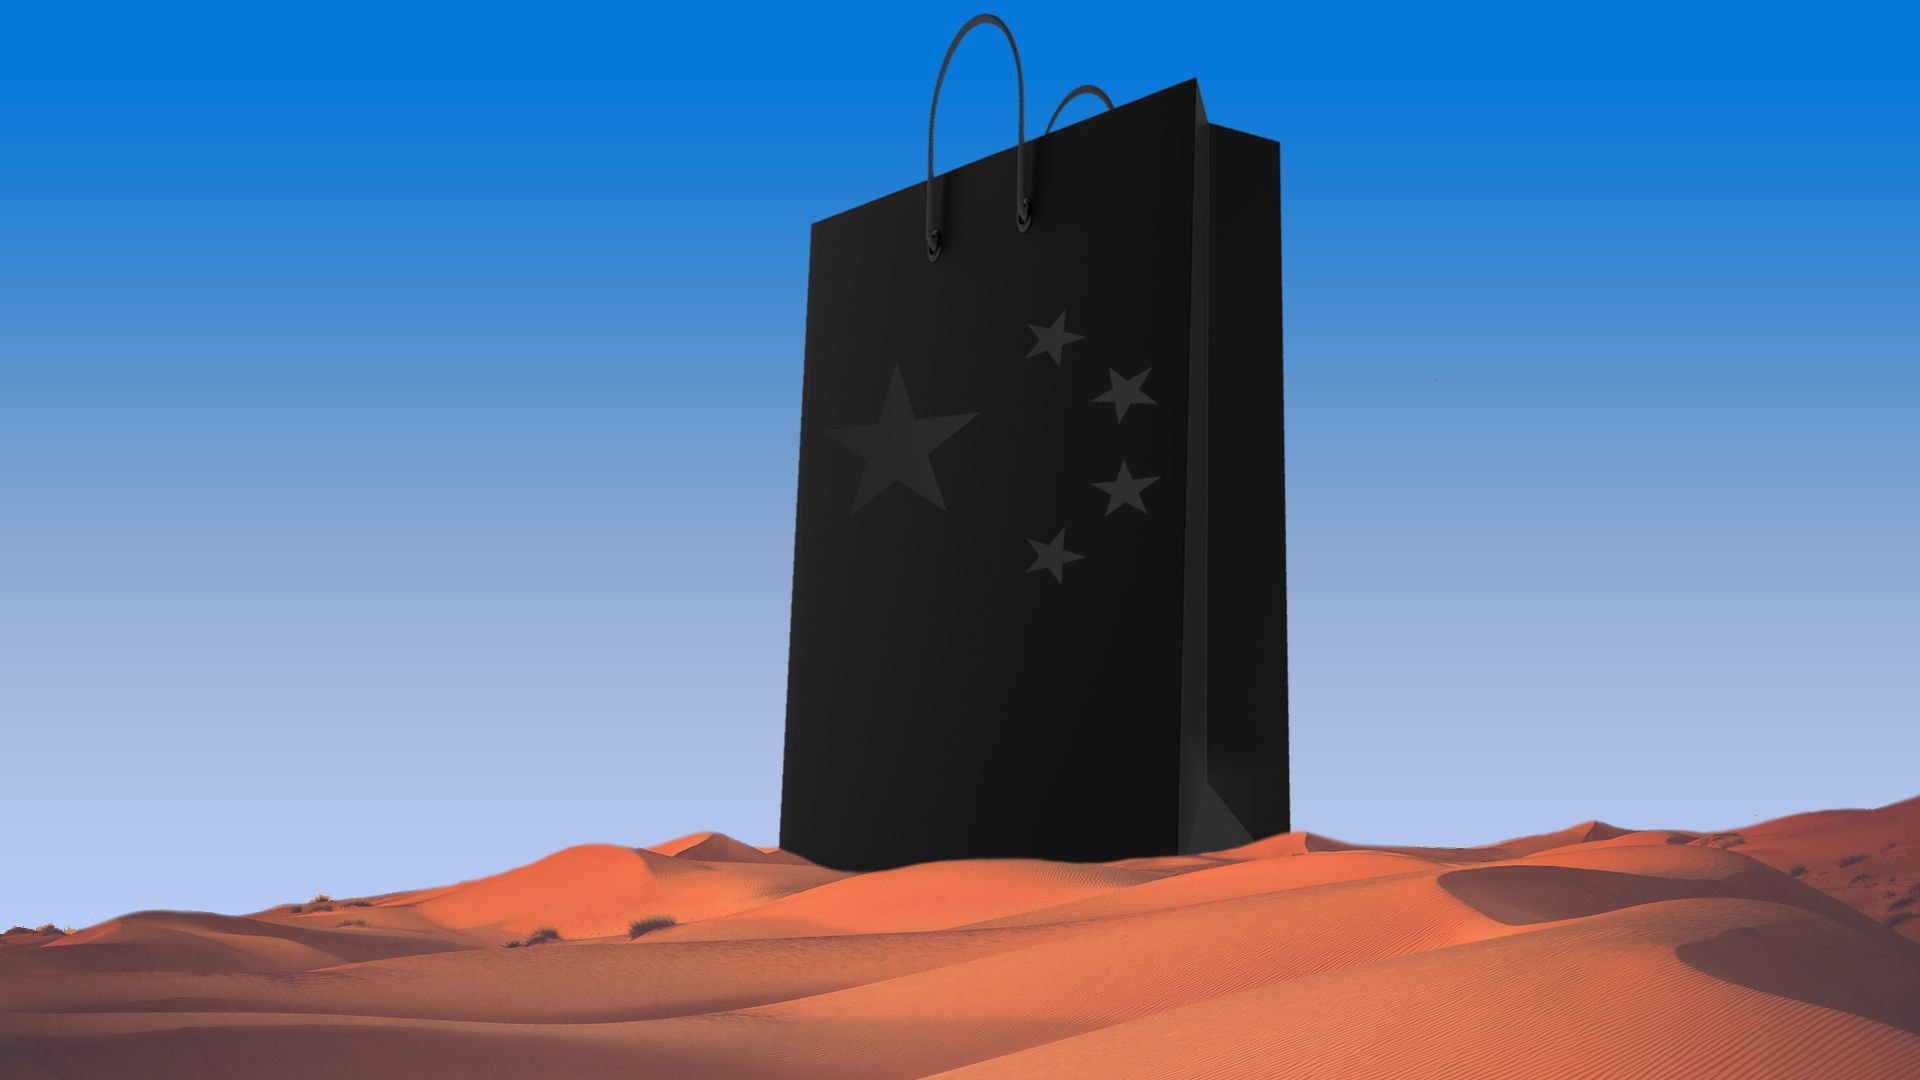 Illustration of bag with China stars